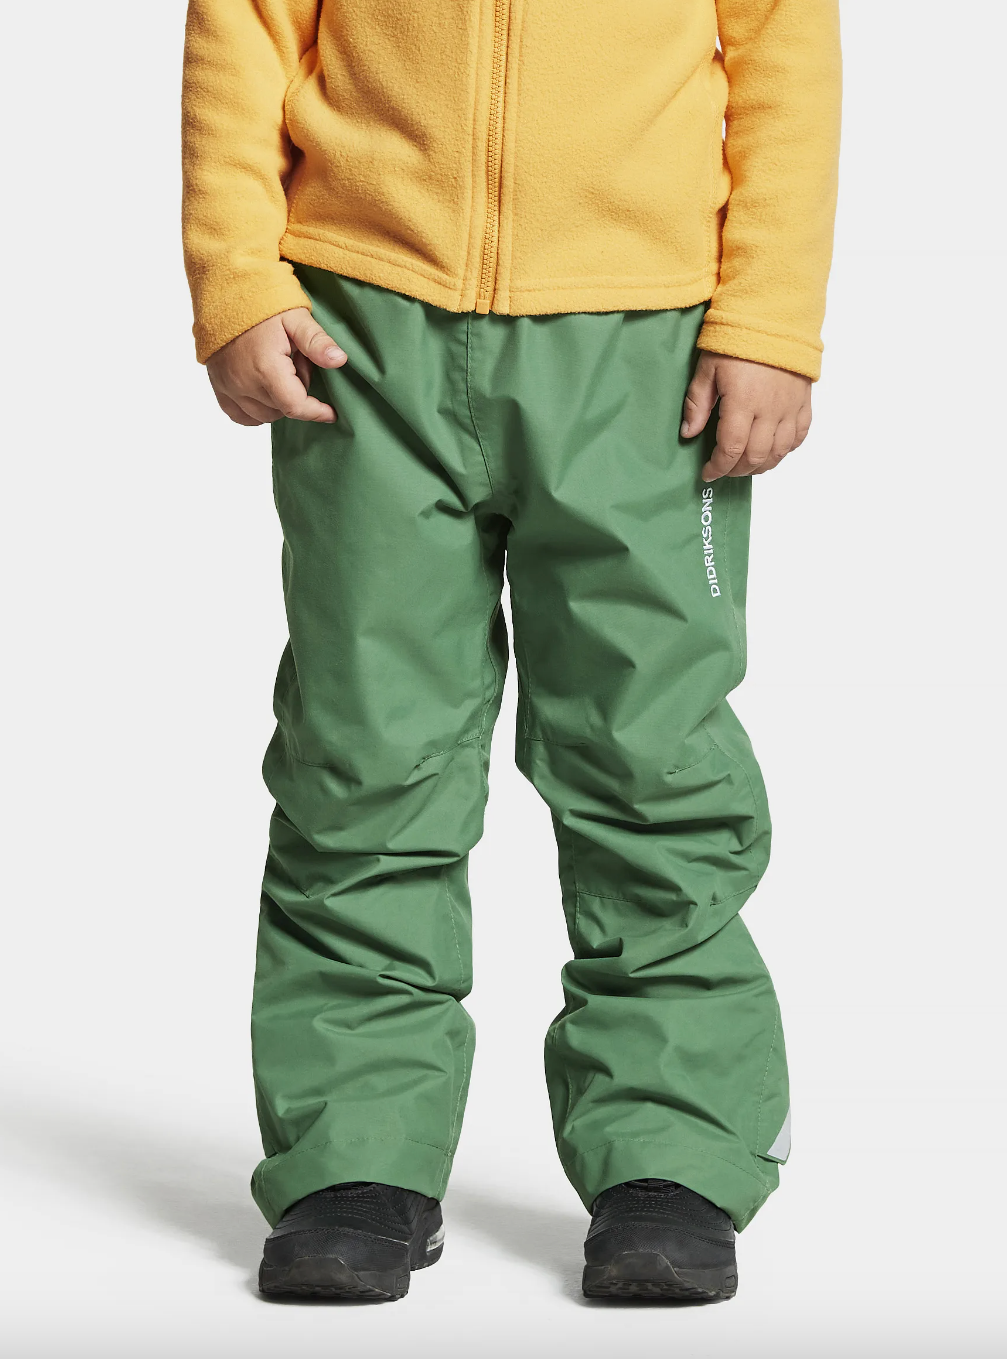 Didriksons Kids Idur 2 Waterproof Trousers (Palm Green)(Ages 1-7)